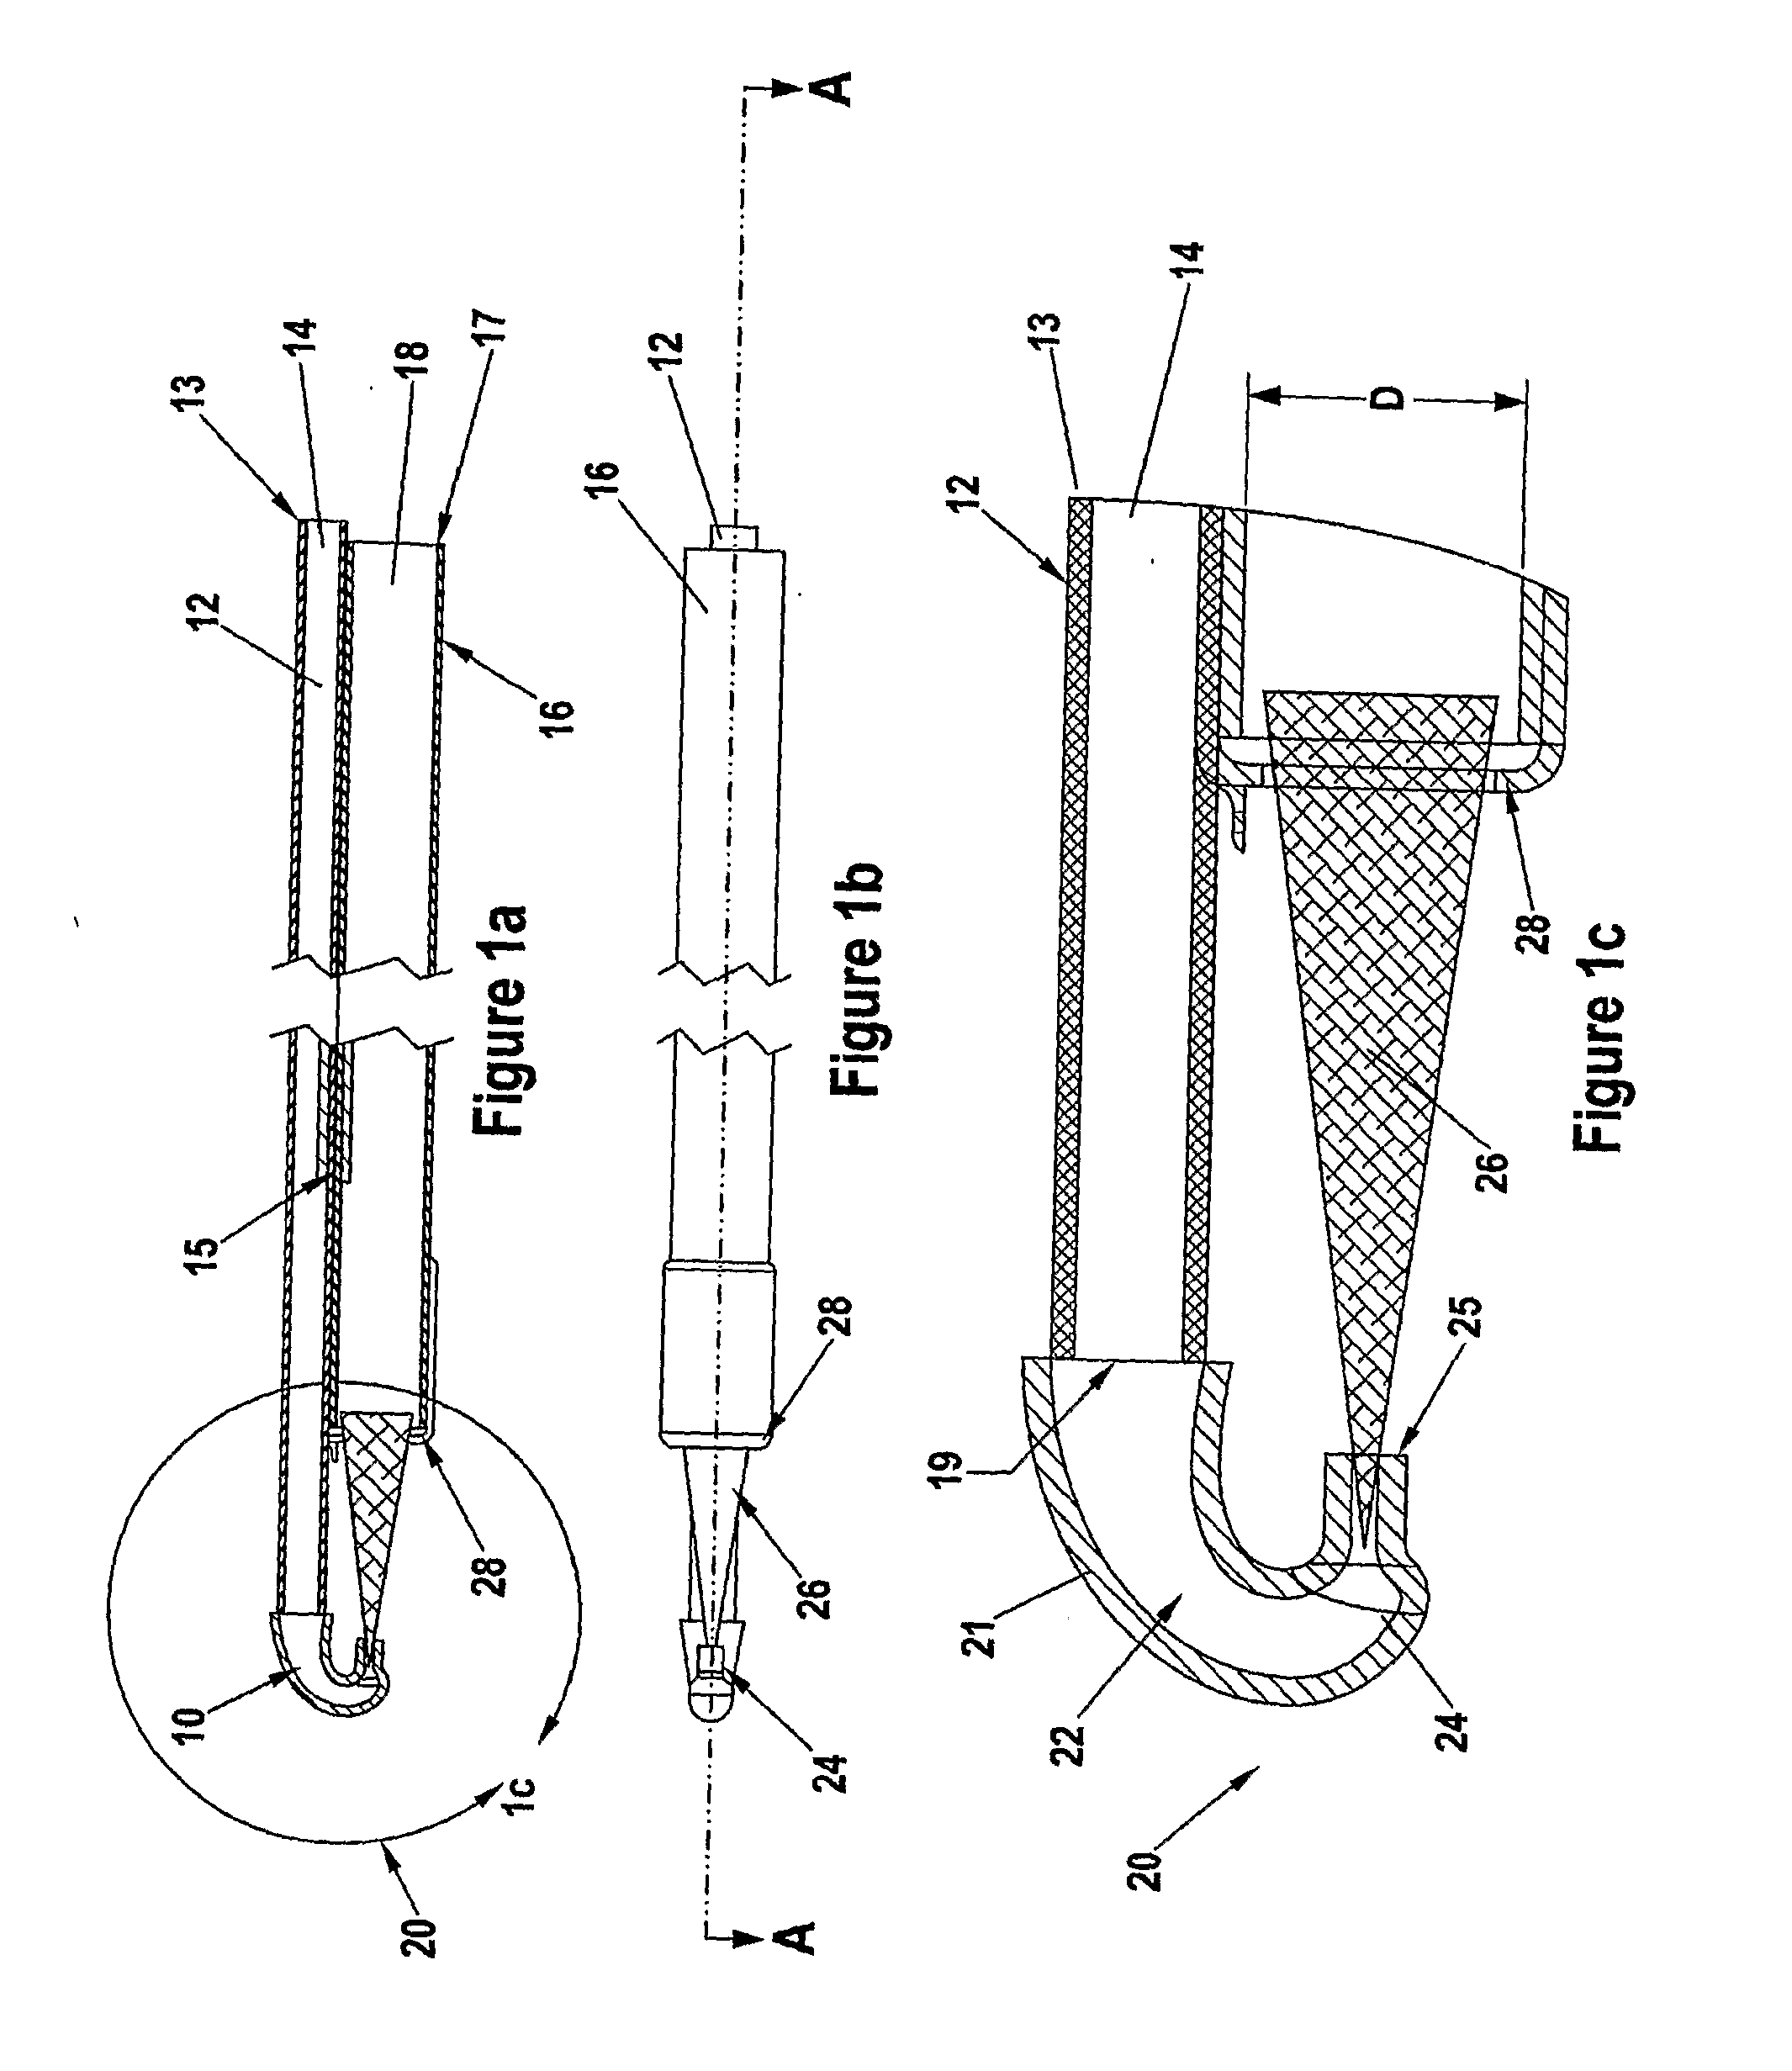 Electroformed liquid jet surgical instrument